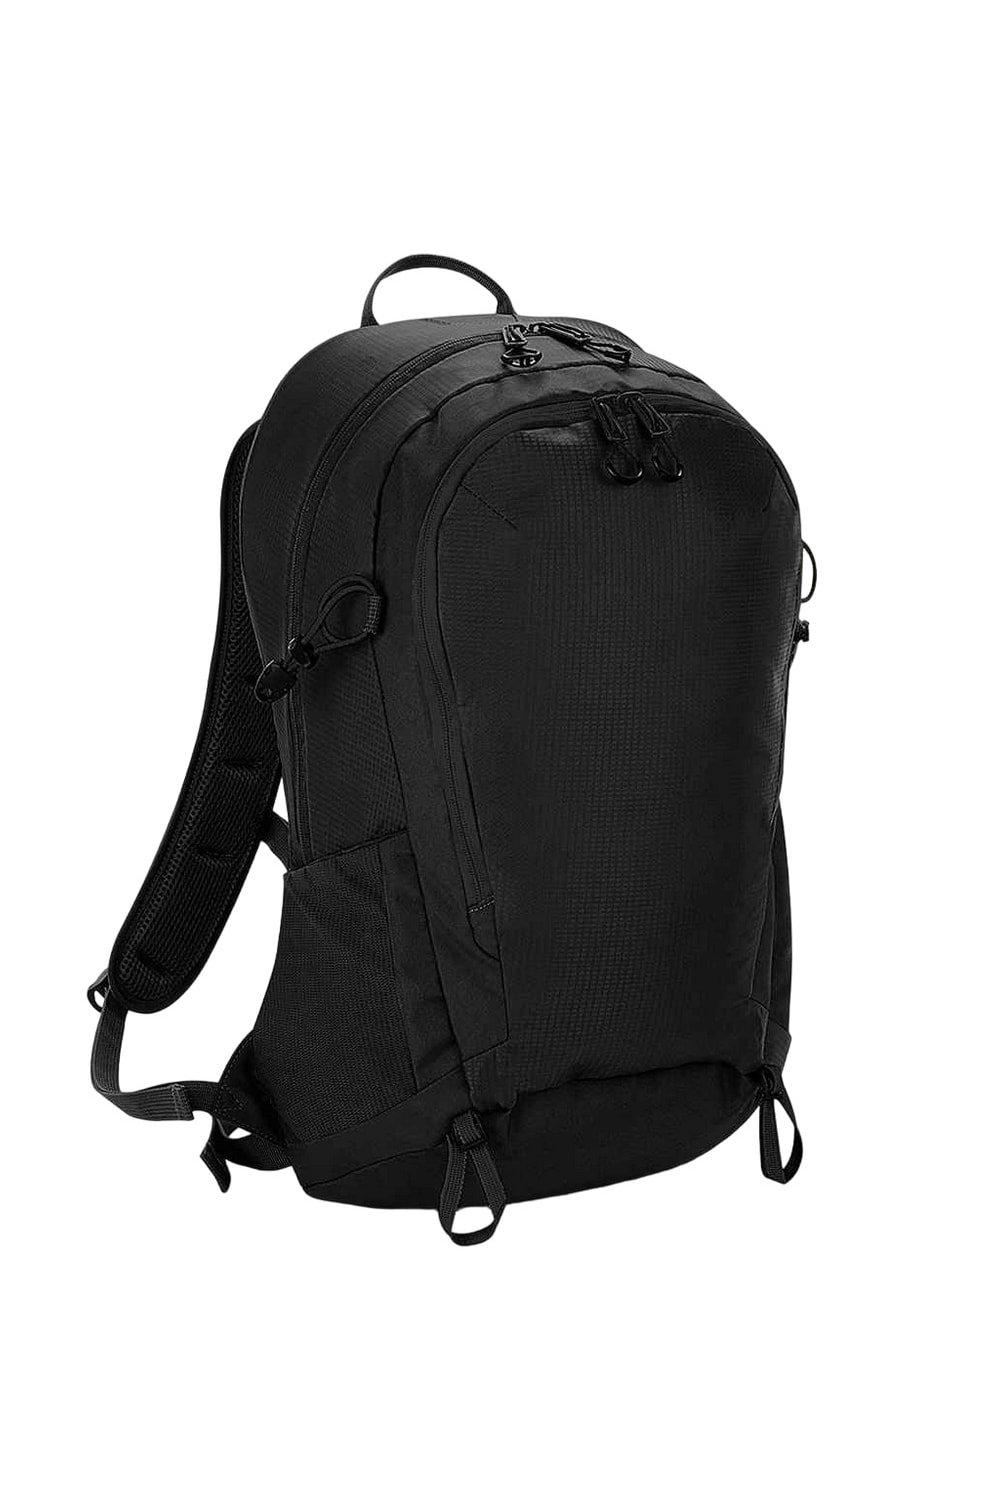 SLX-Lite 25L Backpack